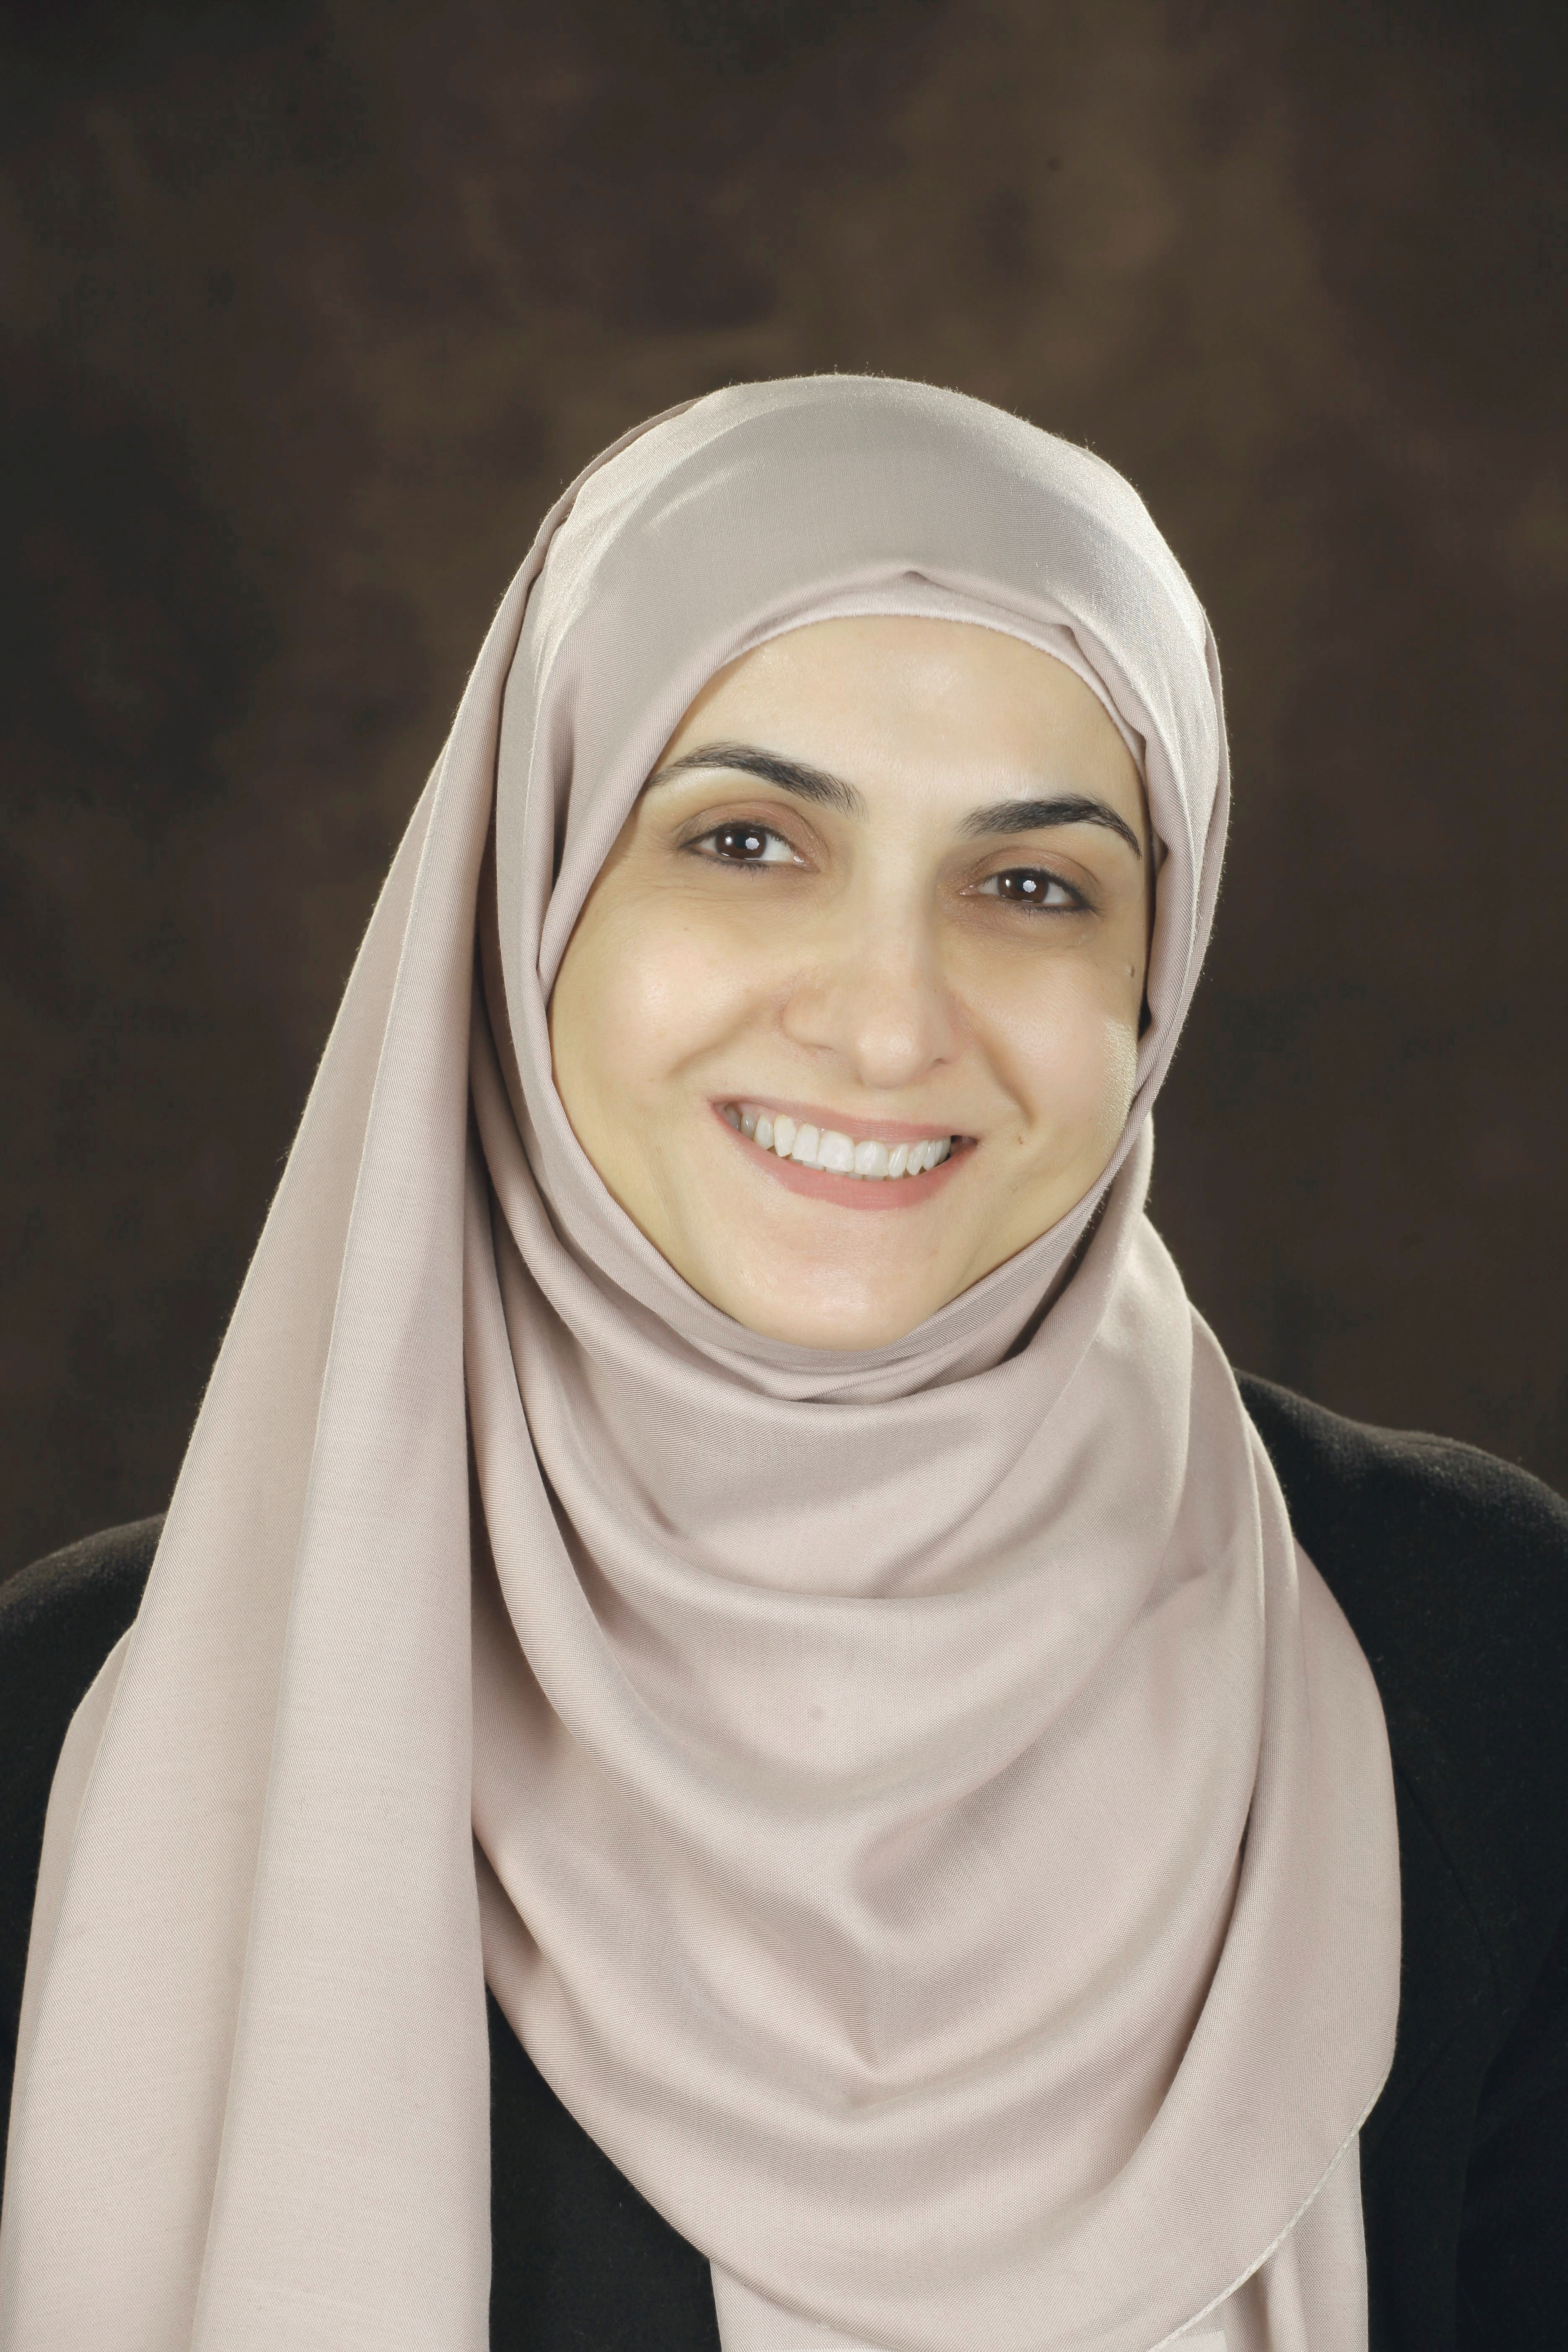 Jordanian writer Sana'a Al-Hattab